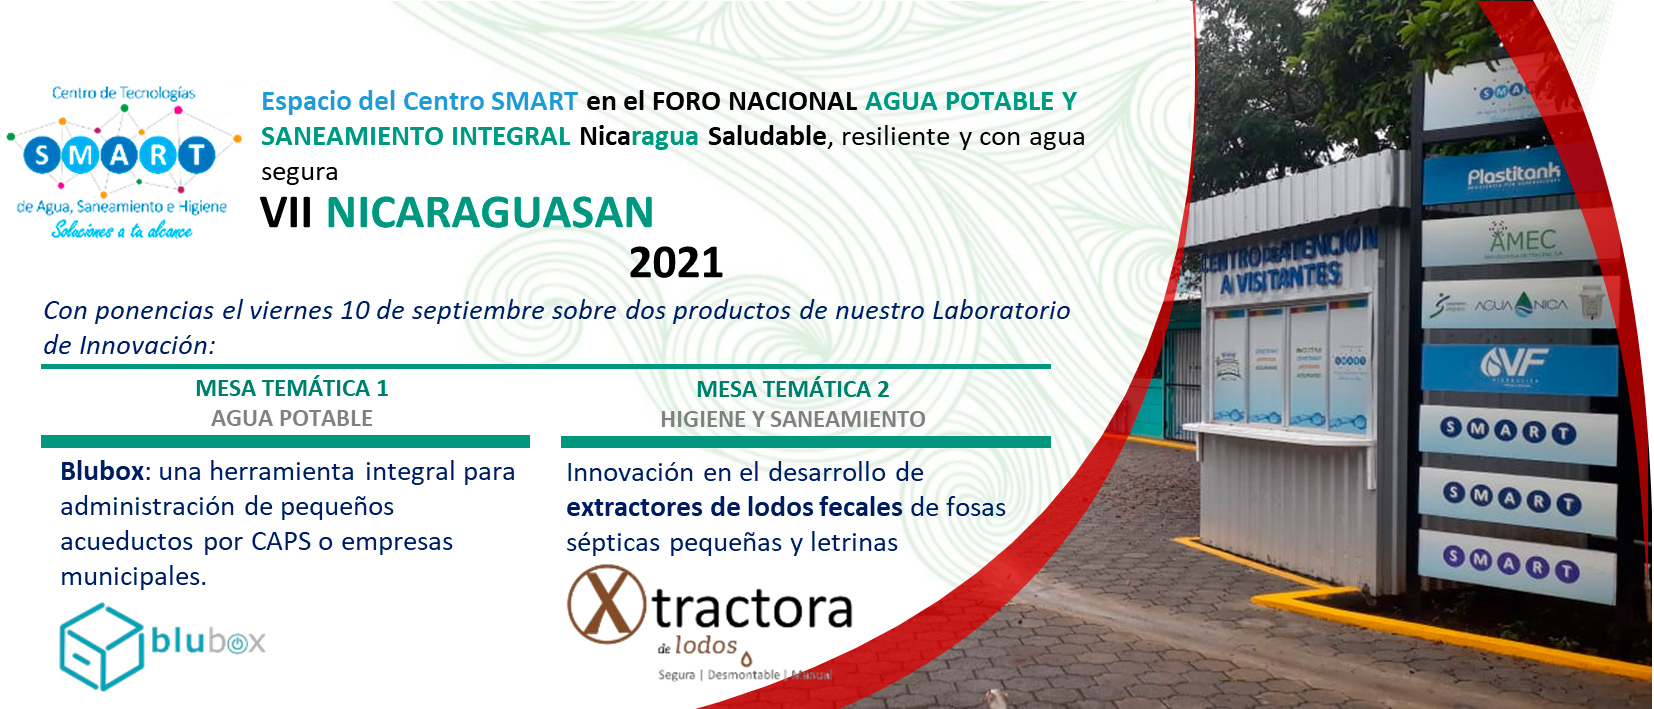 Arte-espacio-NicarguaSan-2021-horizontal-web